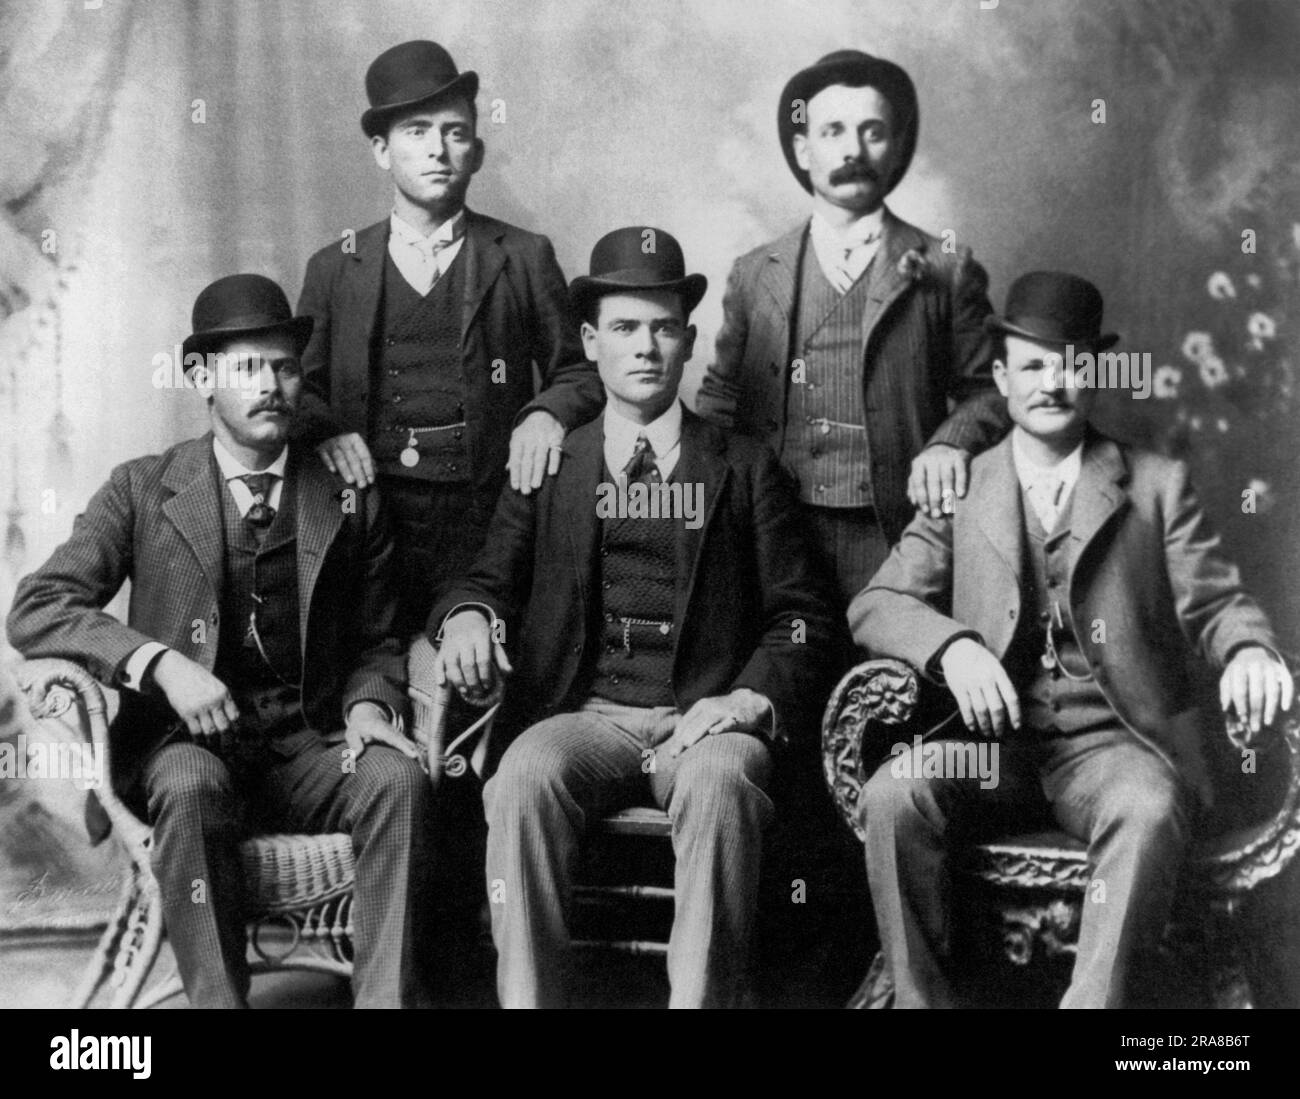 Ft. Worth, Texas,  1901. The Wild Bunch Gang: Front, L-R: Harry Longabaugh, aka The Sundance Kid, Ben Kilpatrick, aka The Tall Texan, Robert Leroy Parker, aka Butch Cassidy. Back, L-R: Wil Carver, Harvey Logan, aka Kid Curry Stock Photo